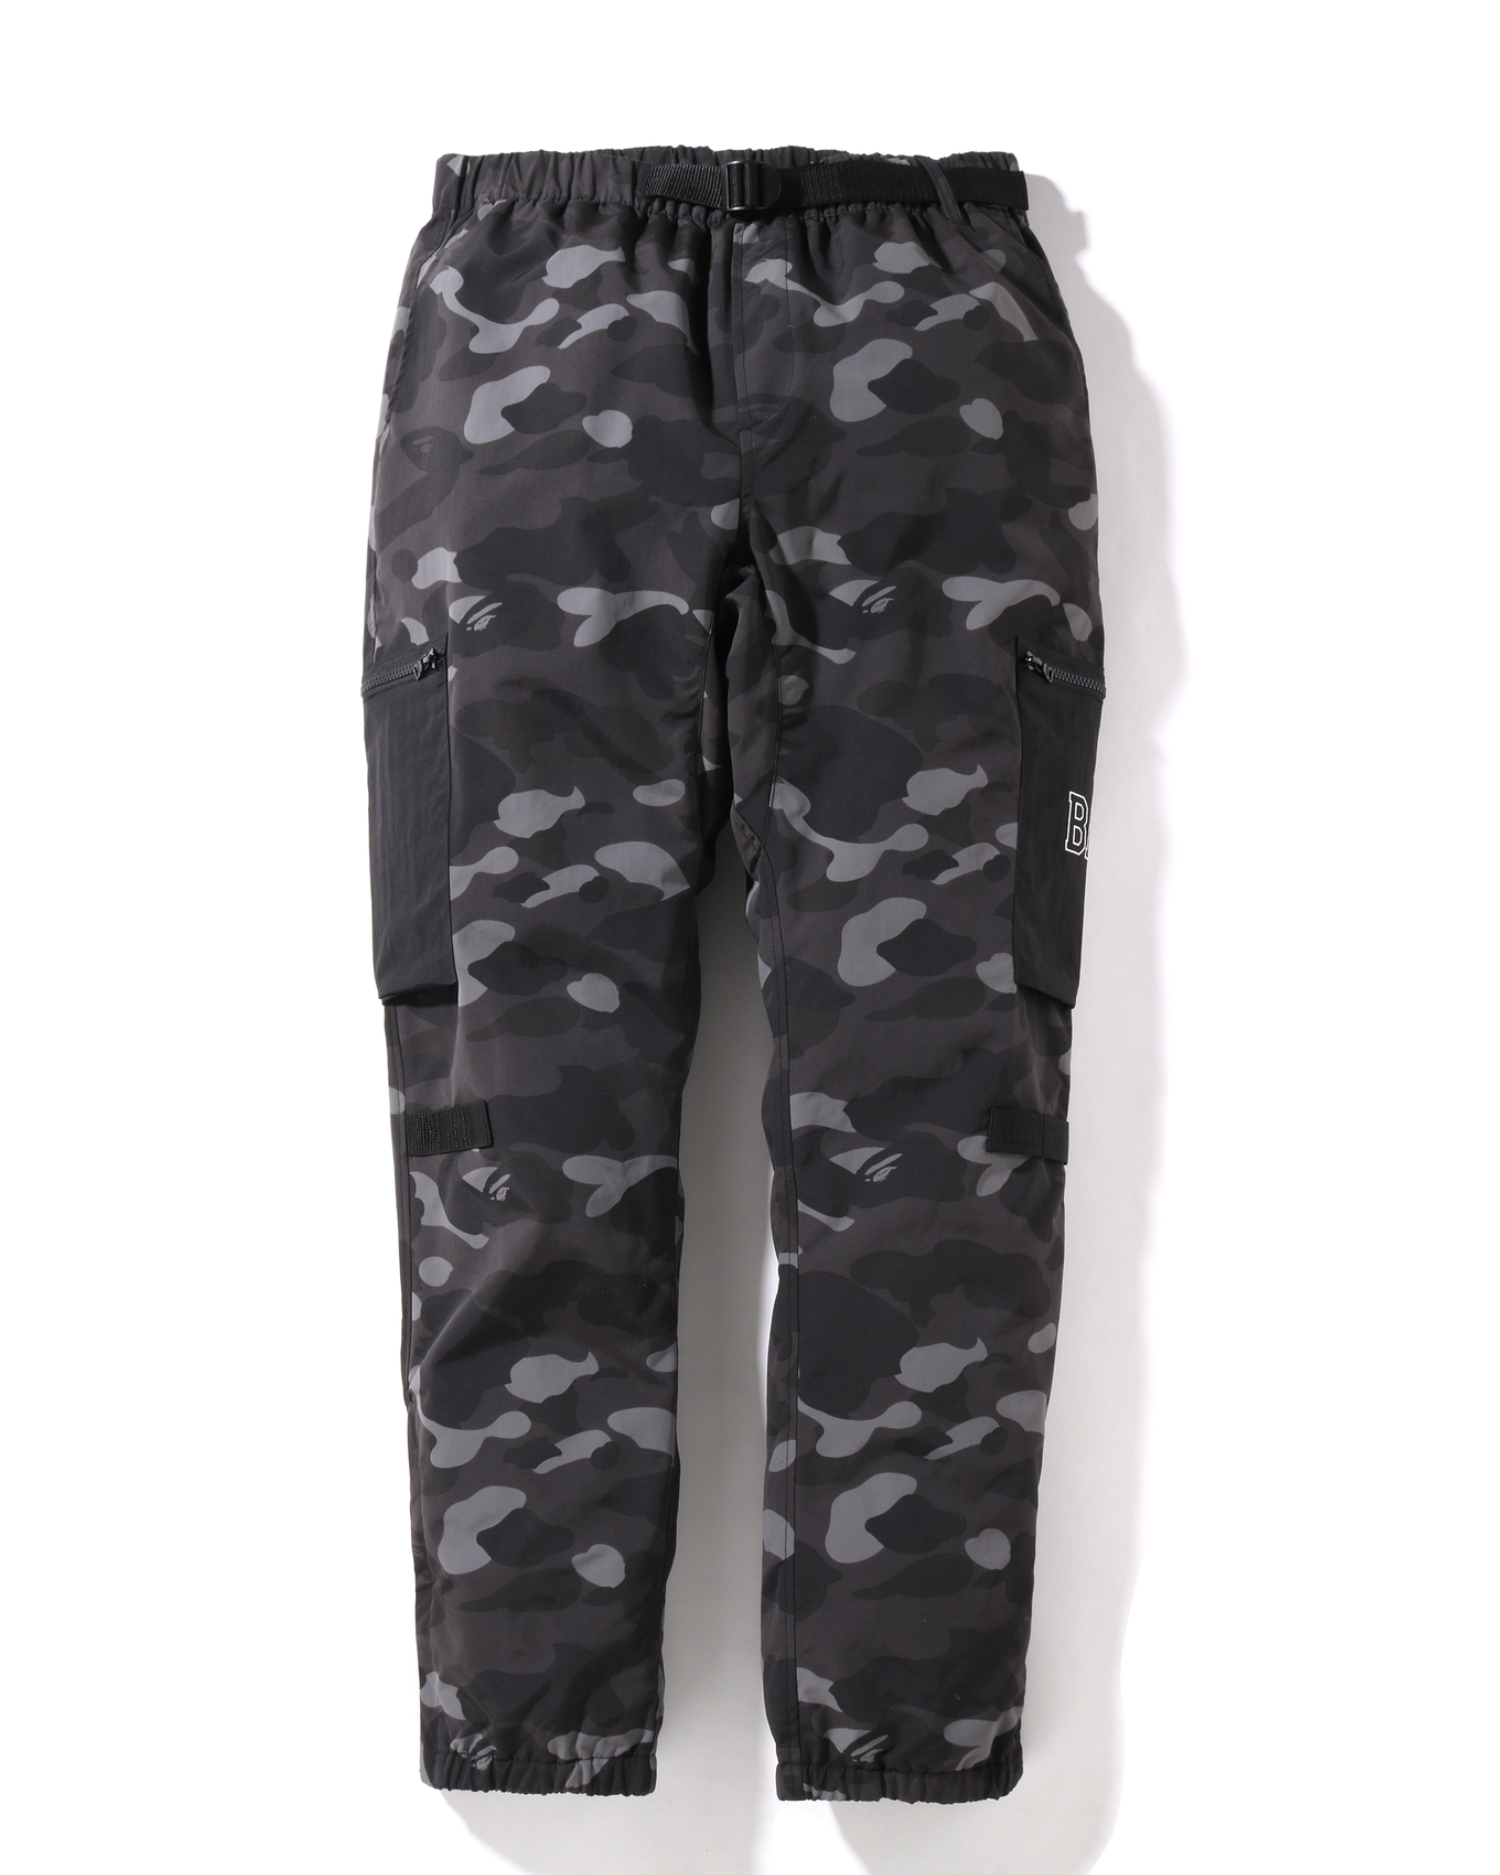 Sapper Cargos : Buy Sapper Multicolour Cotton Camouflage Cargo Pant Online  | Nykaa Fashion